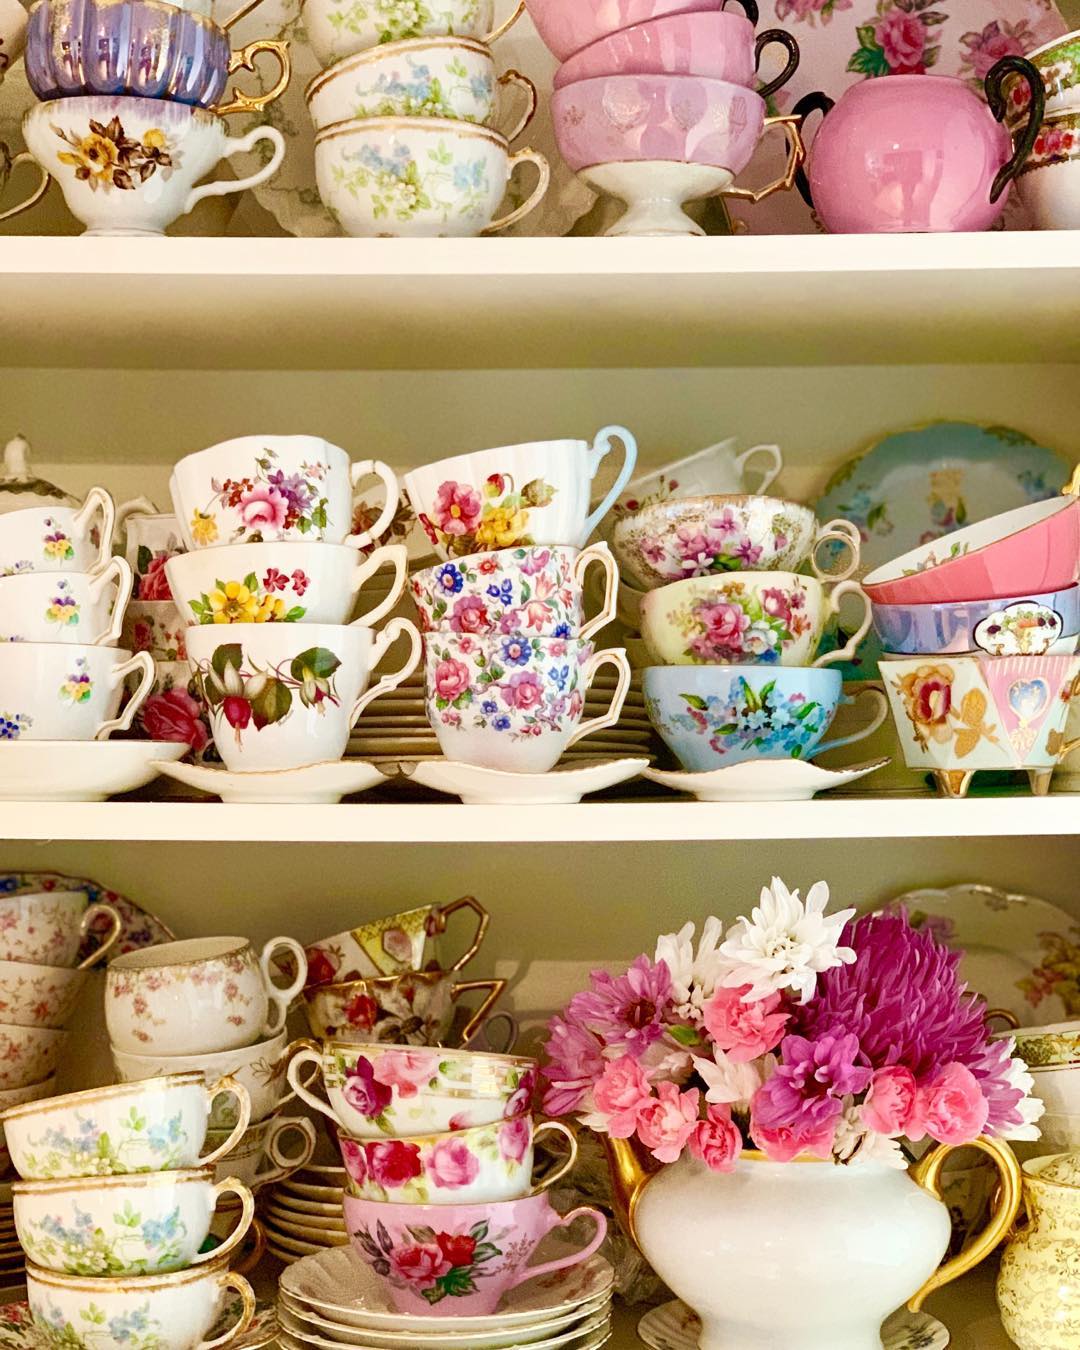 Shelves with teacups. Photo by Instagram user @calbert1000